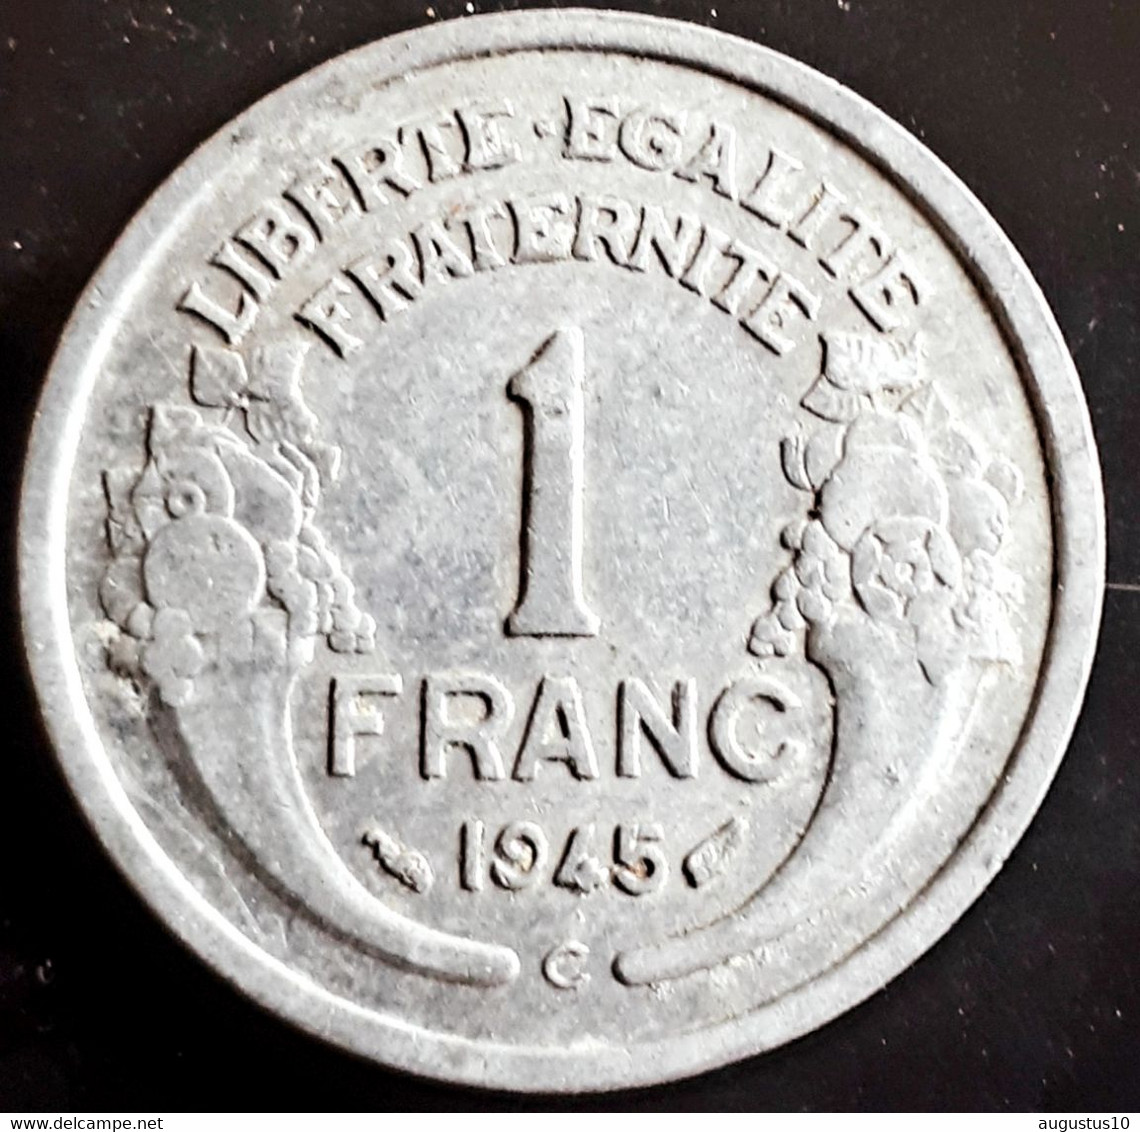 FRANCE: 1 FRANC SCARCE 1945 C KM 885a.3 SUP - 1 Franc